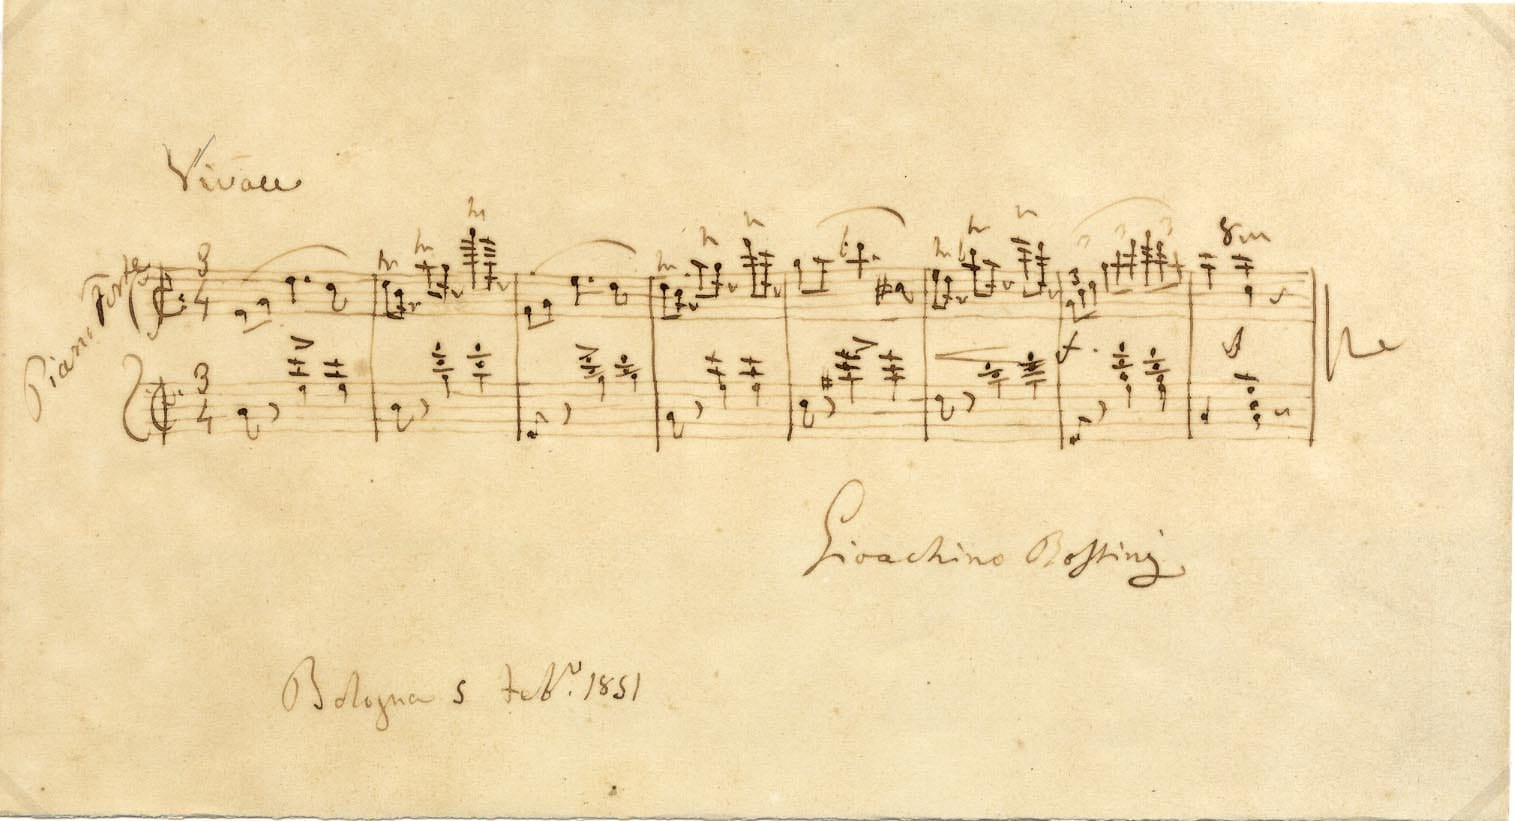 Giachino Antonio Rossini Autograph Autogramm | ID 7405468614805